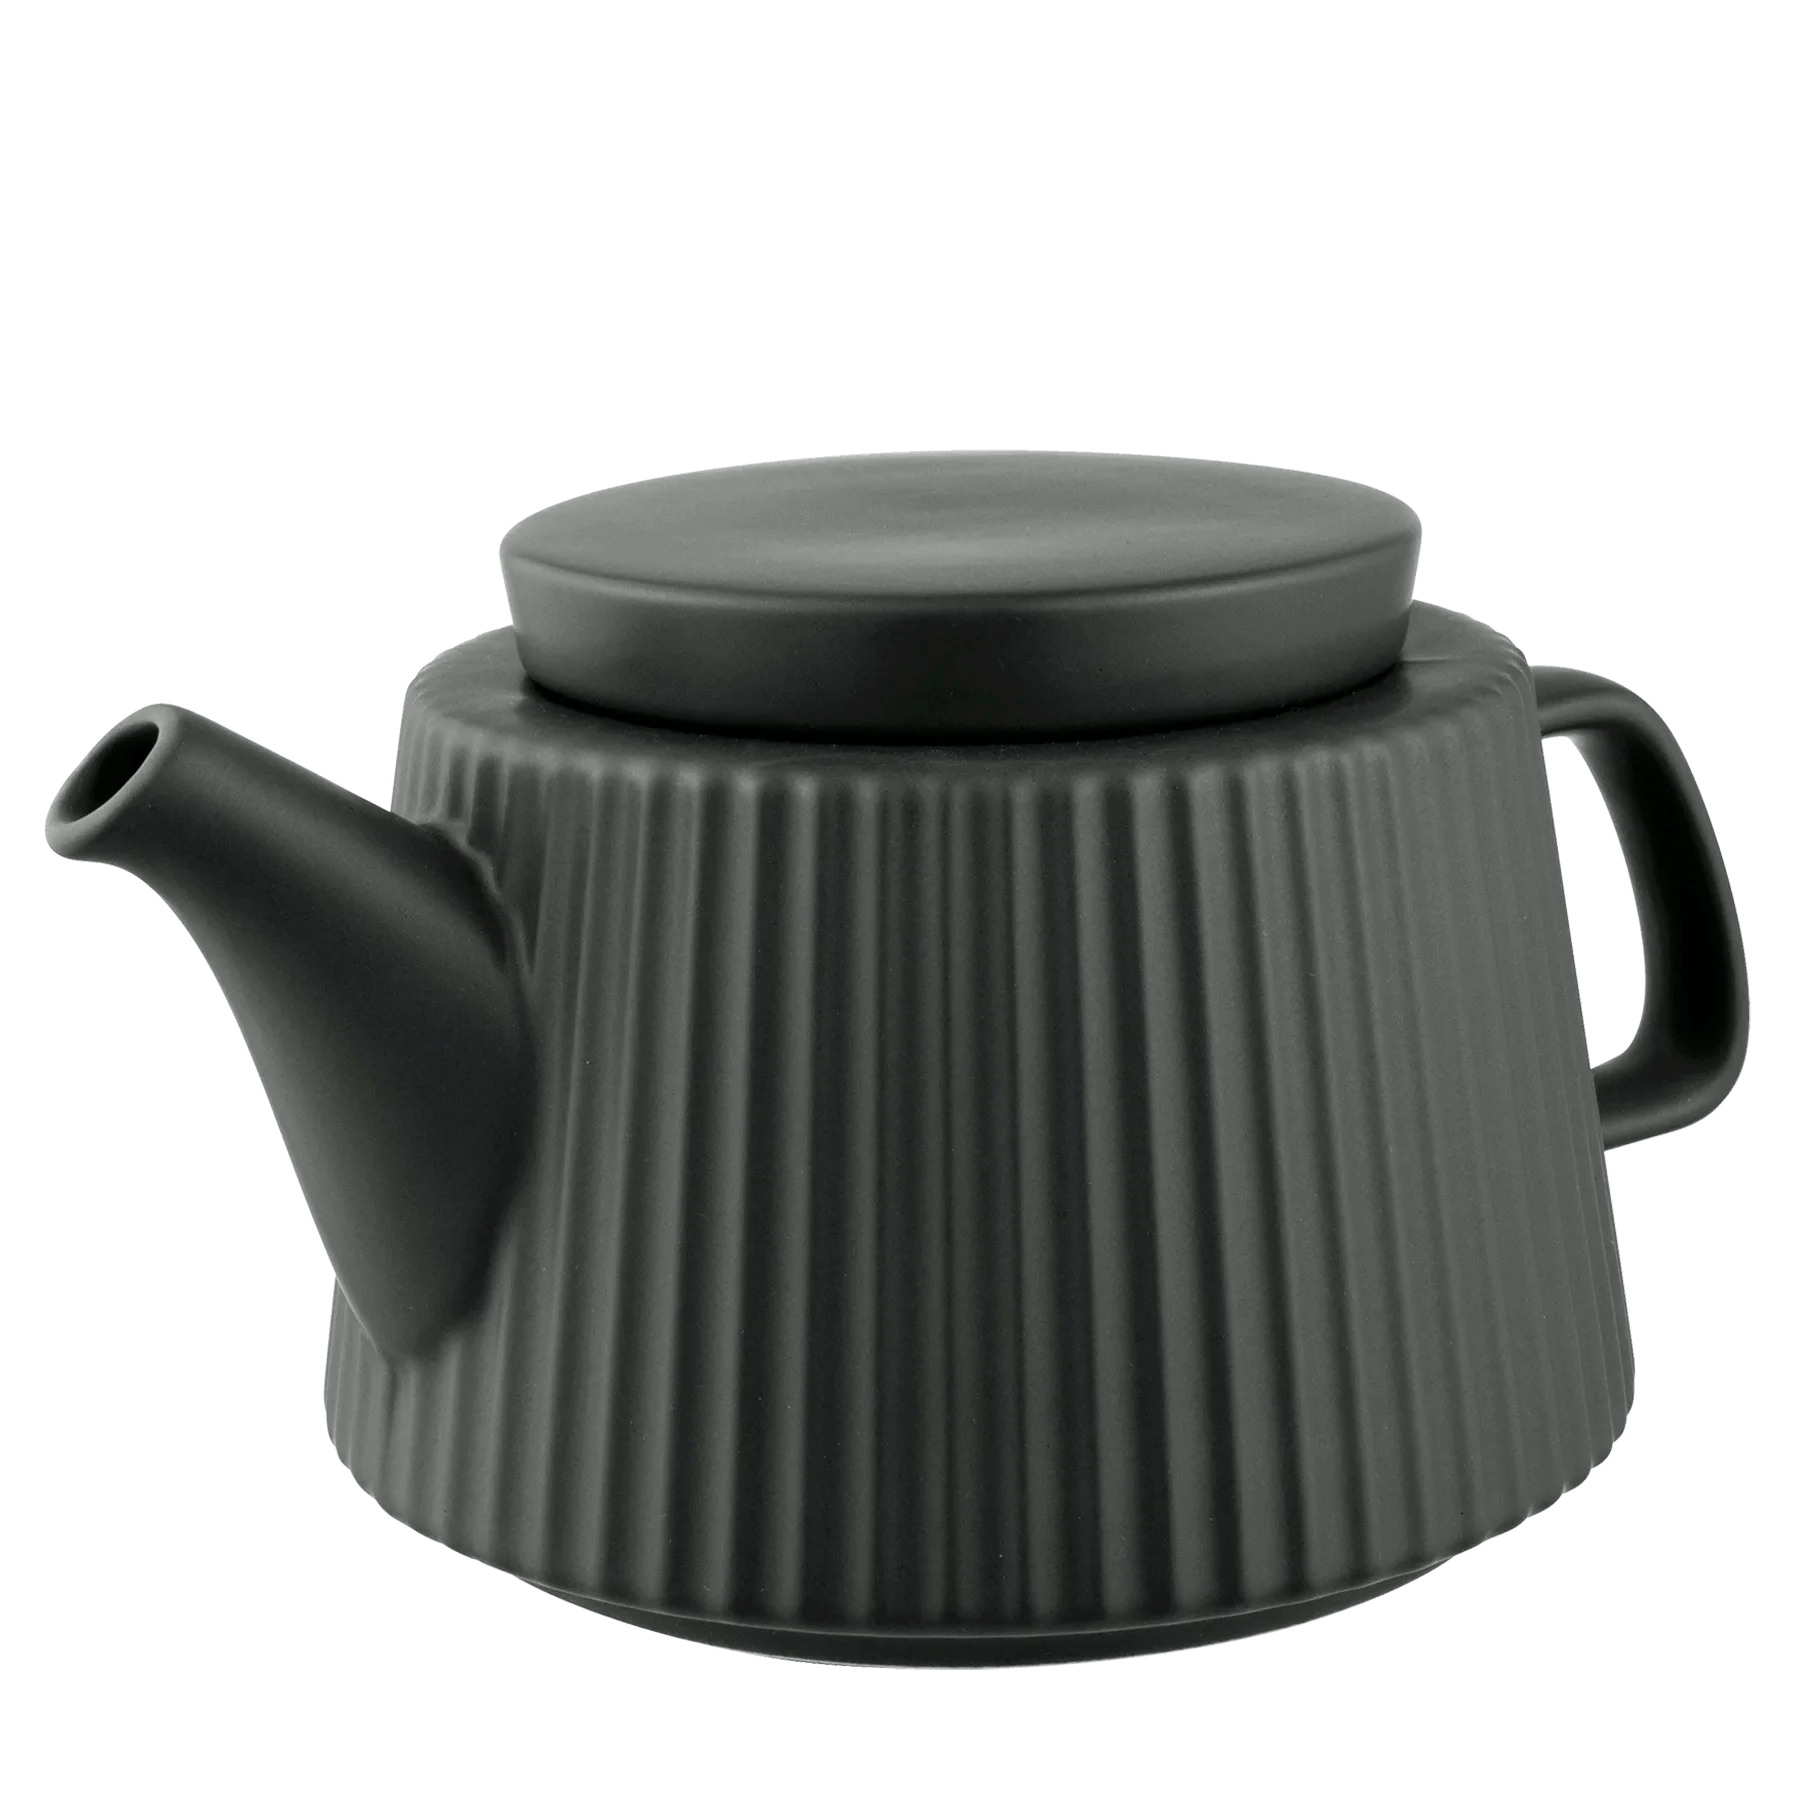 Teapot - Avanti Siena 950mL - Madura Tea